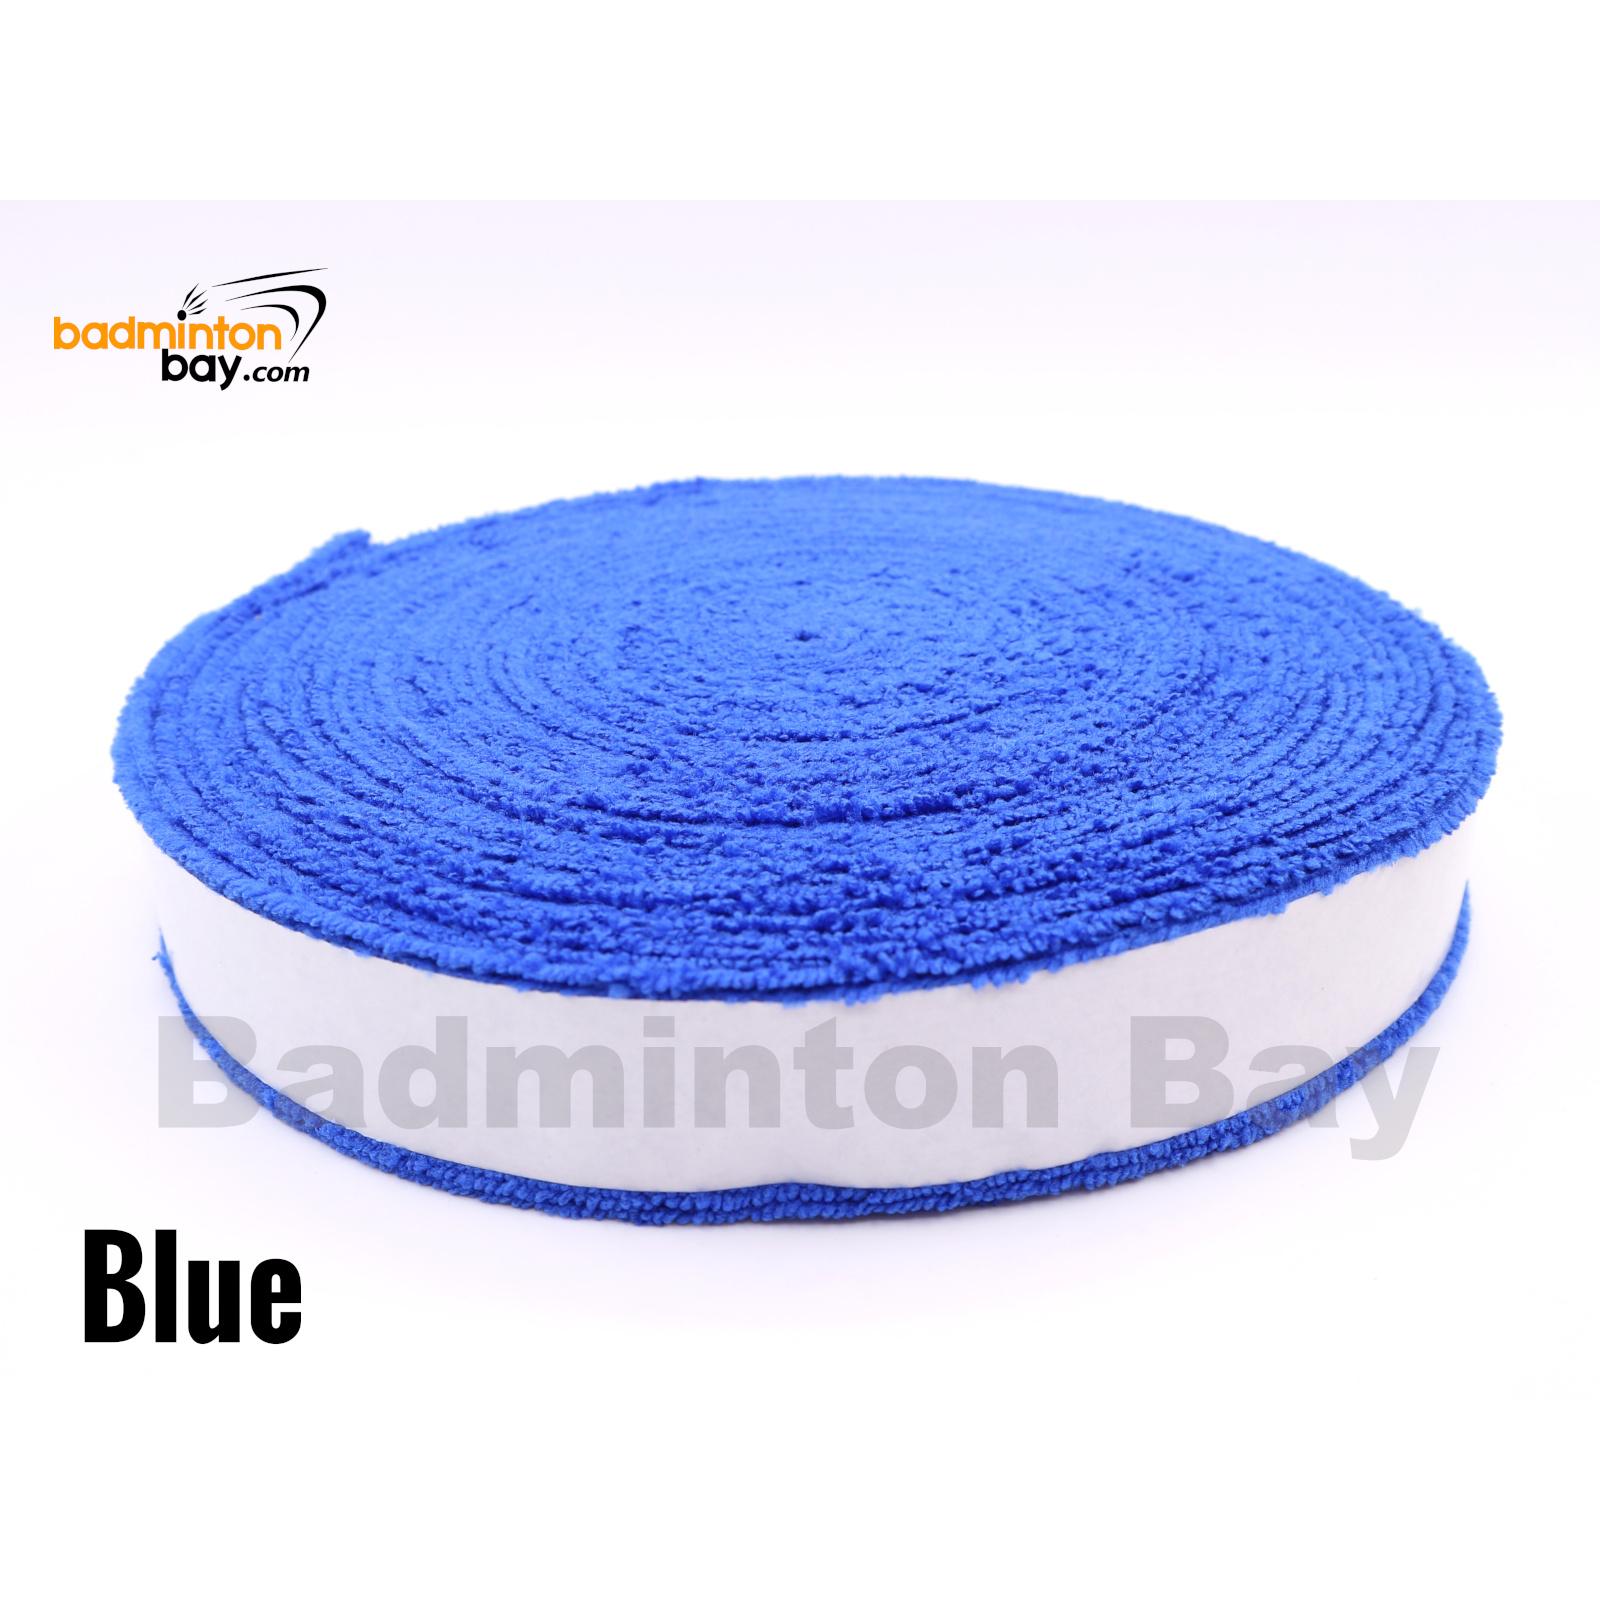 Overgrip Blue Roll Towel Grip Tennis Squash Badminton Racket 